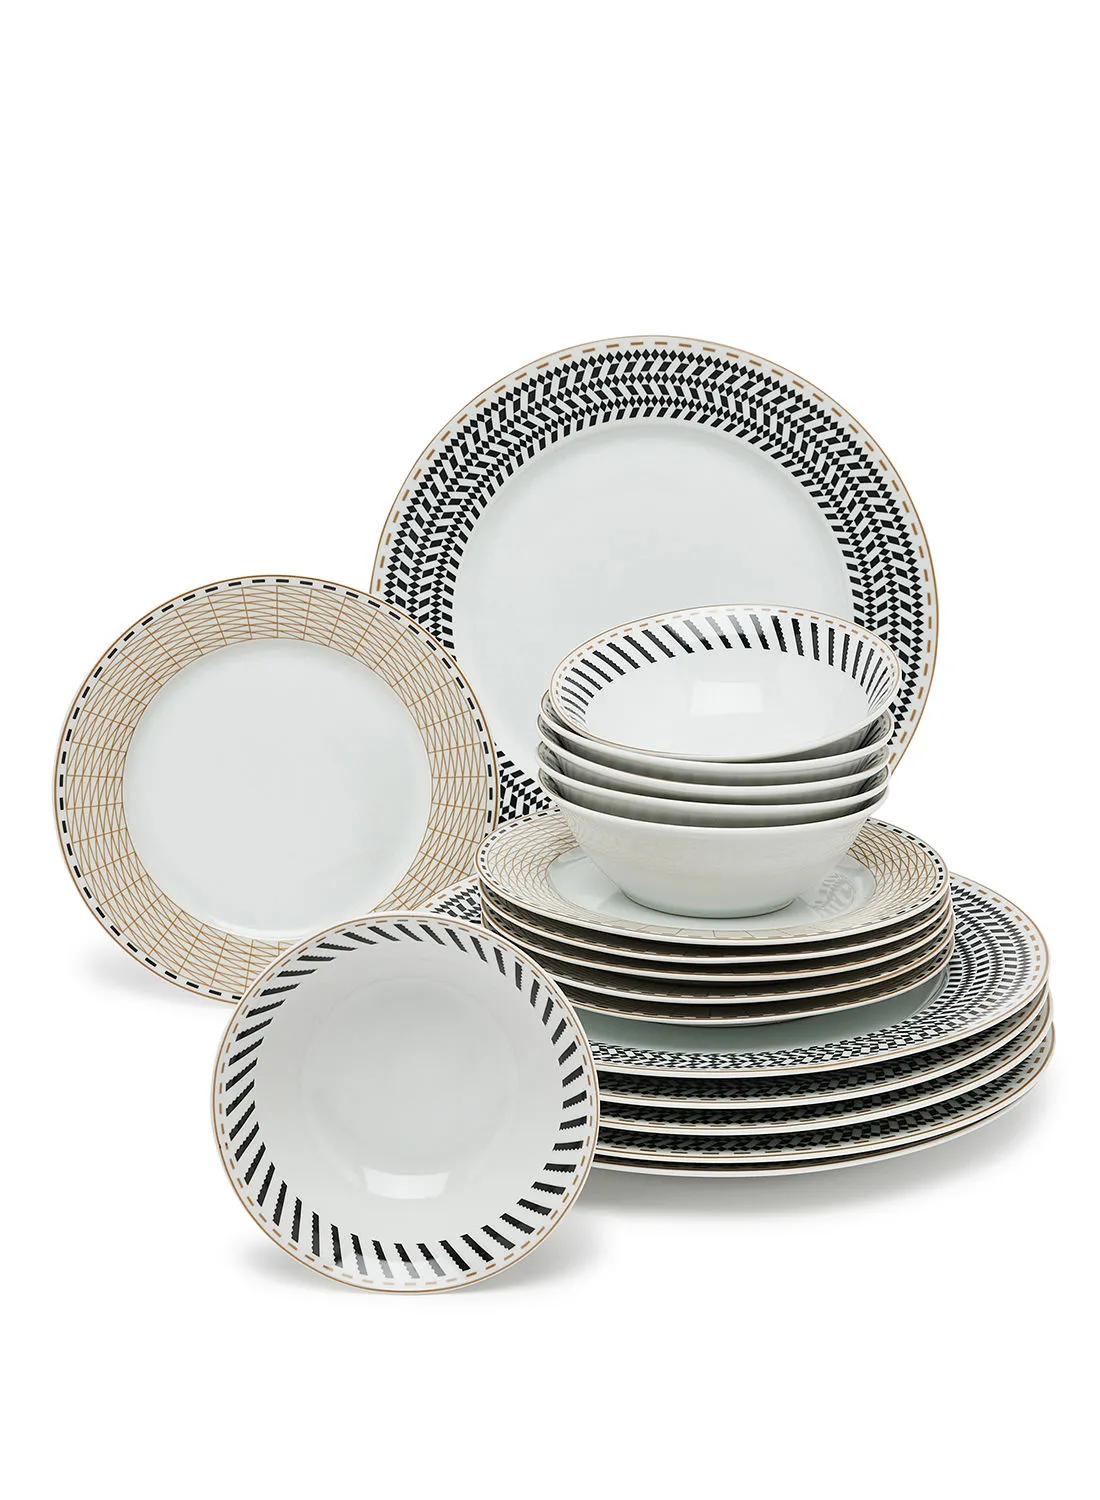 noon east 18 Piece Porcelain Dinner Set - Dishes, Plates - Dinner Plate, Side Plate, Bowl - Serves 6 - Printed Design Geometra